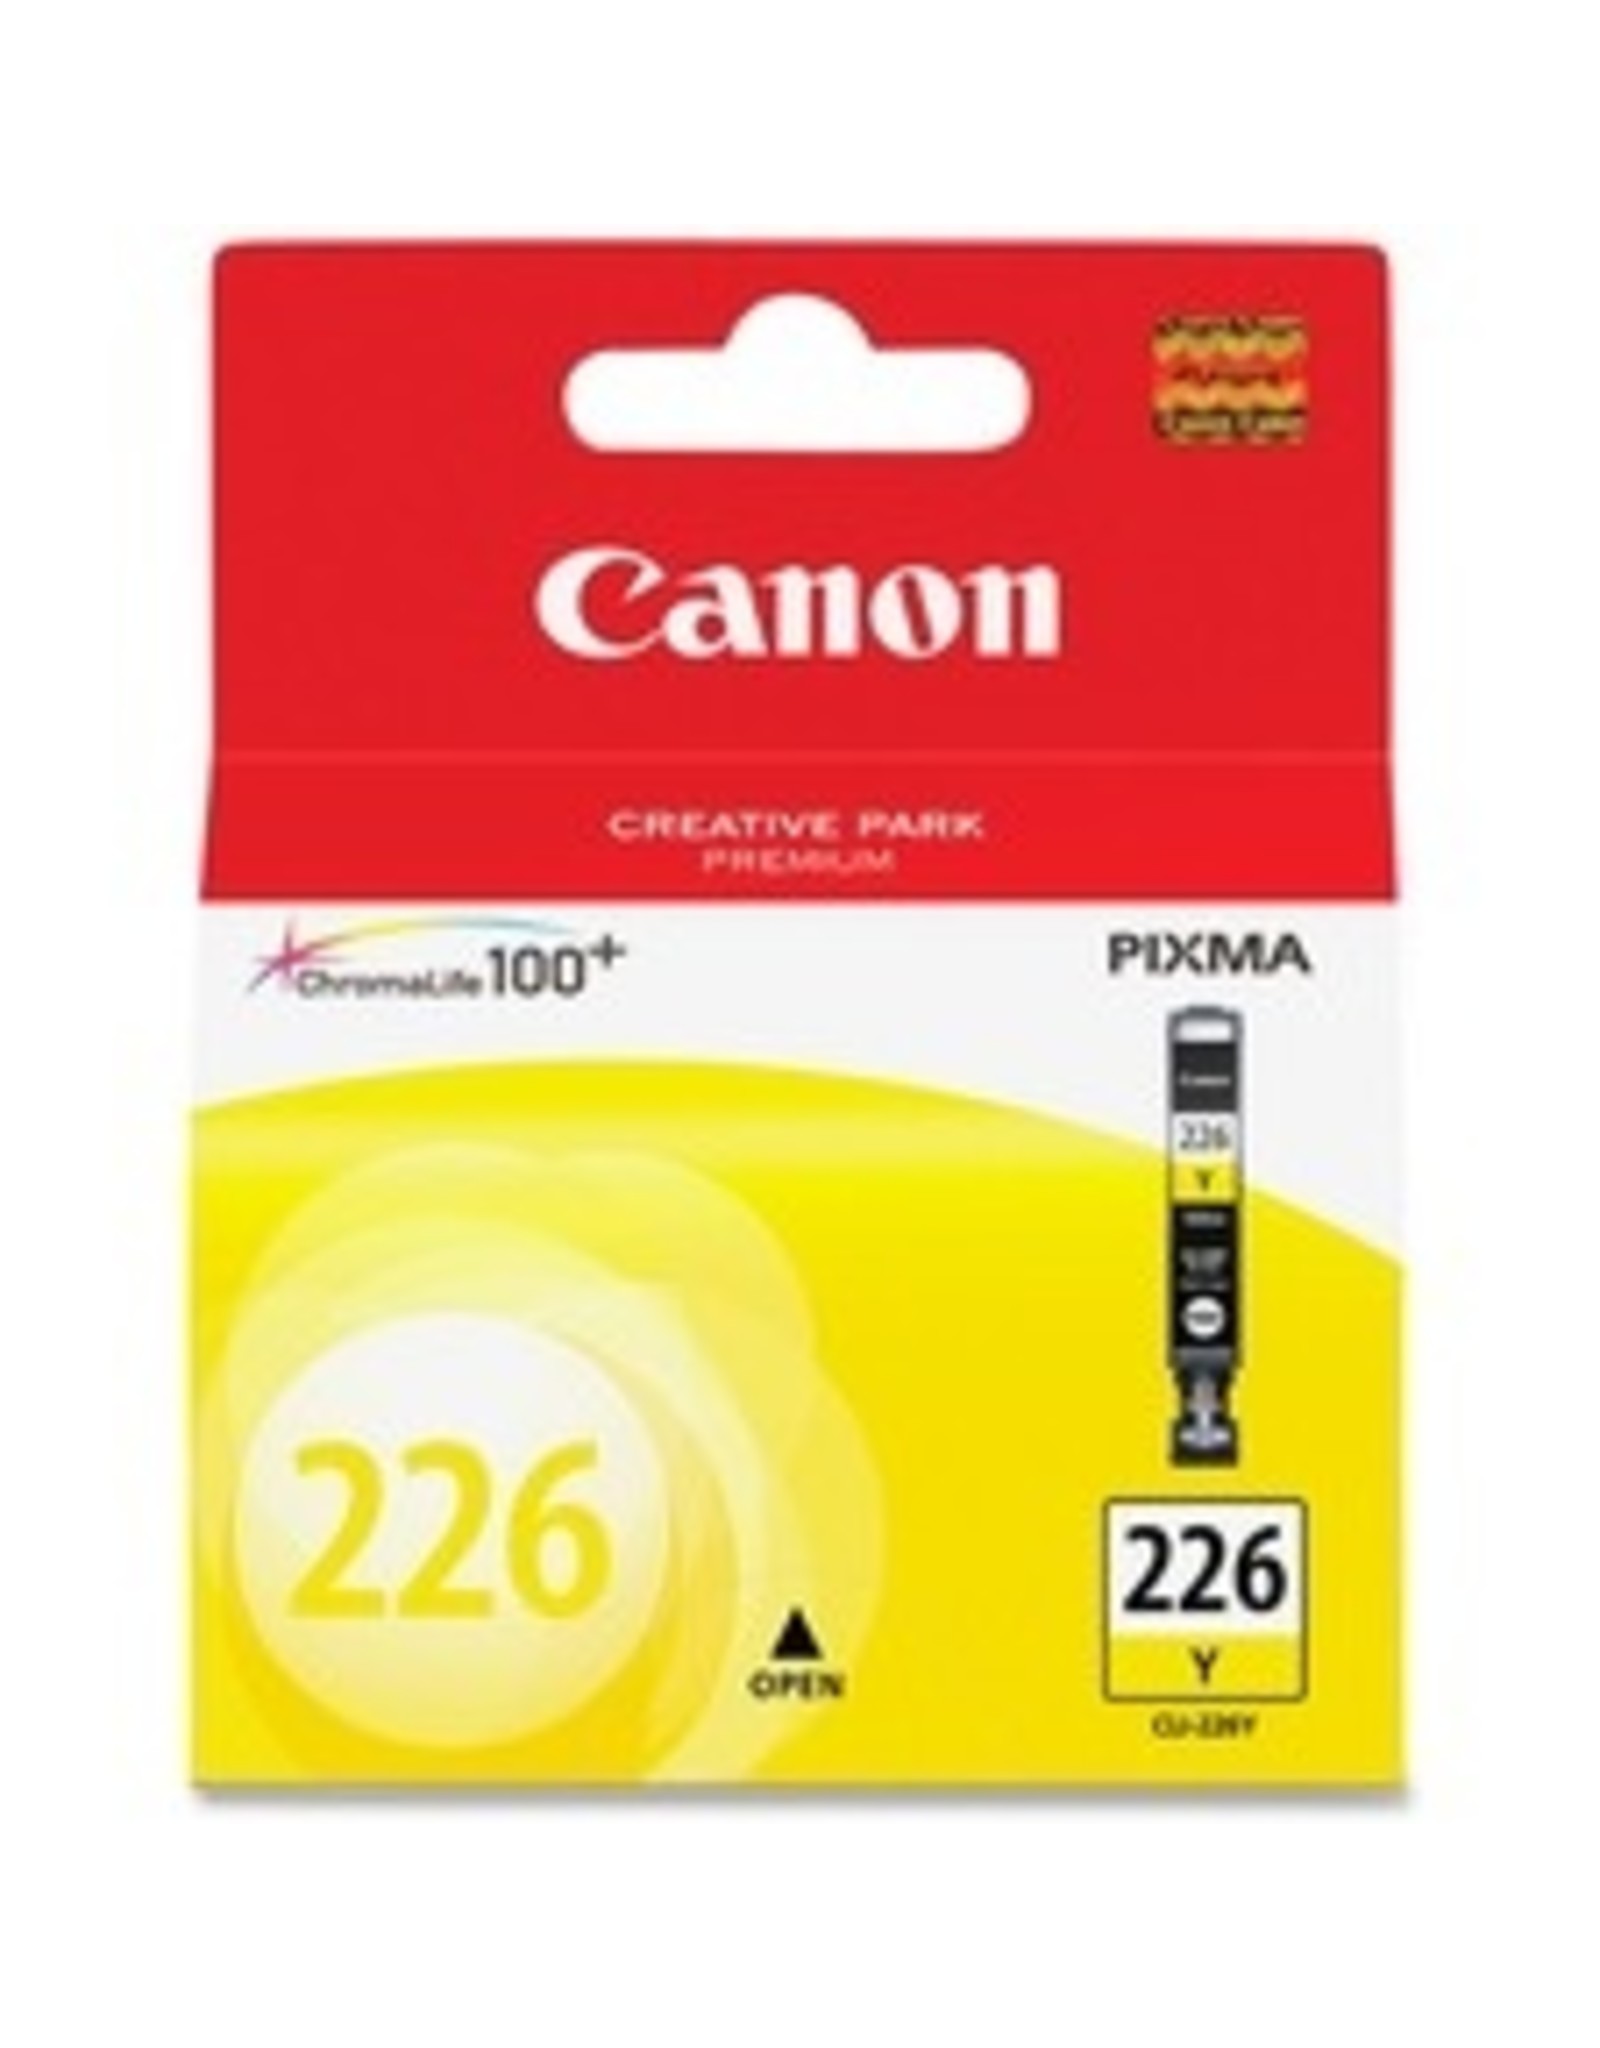 Canon CLI-226Y Yellow Original Ink Cartridge